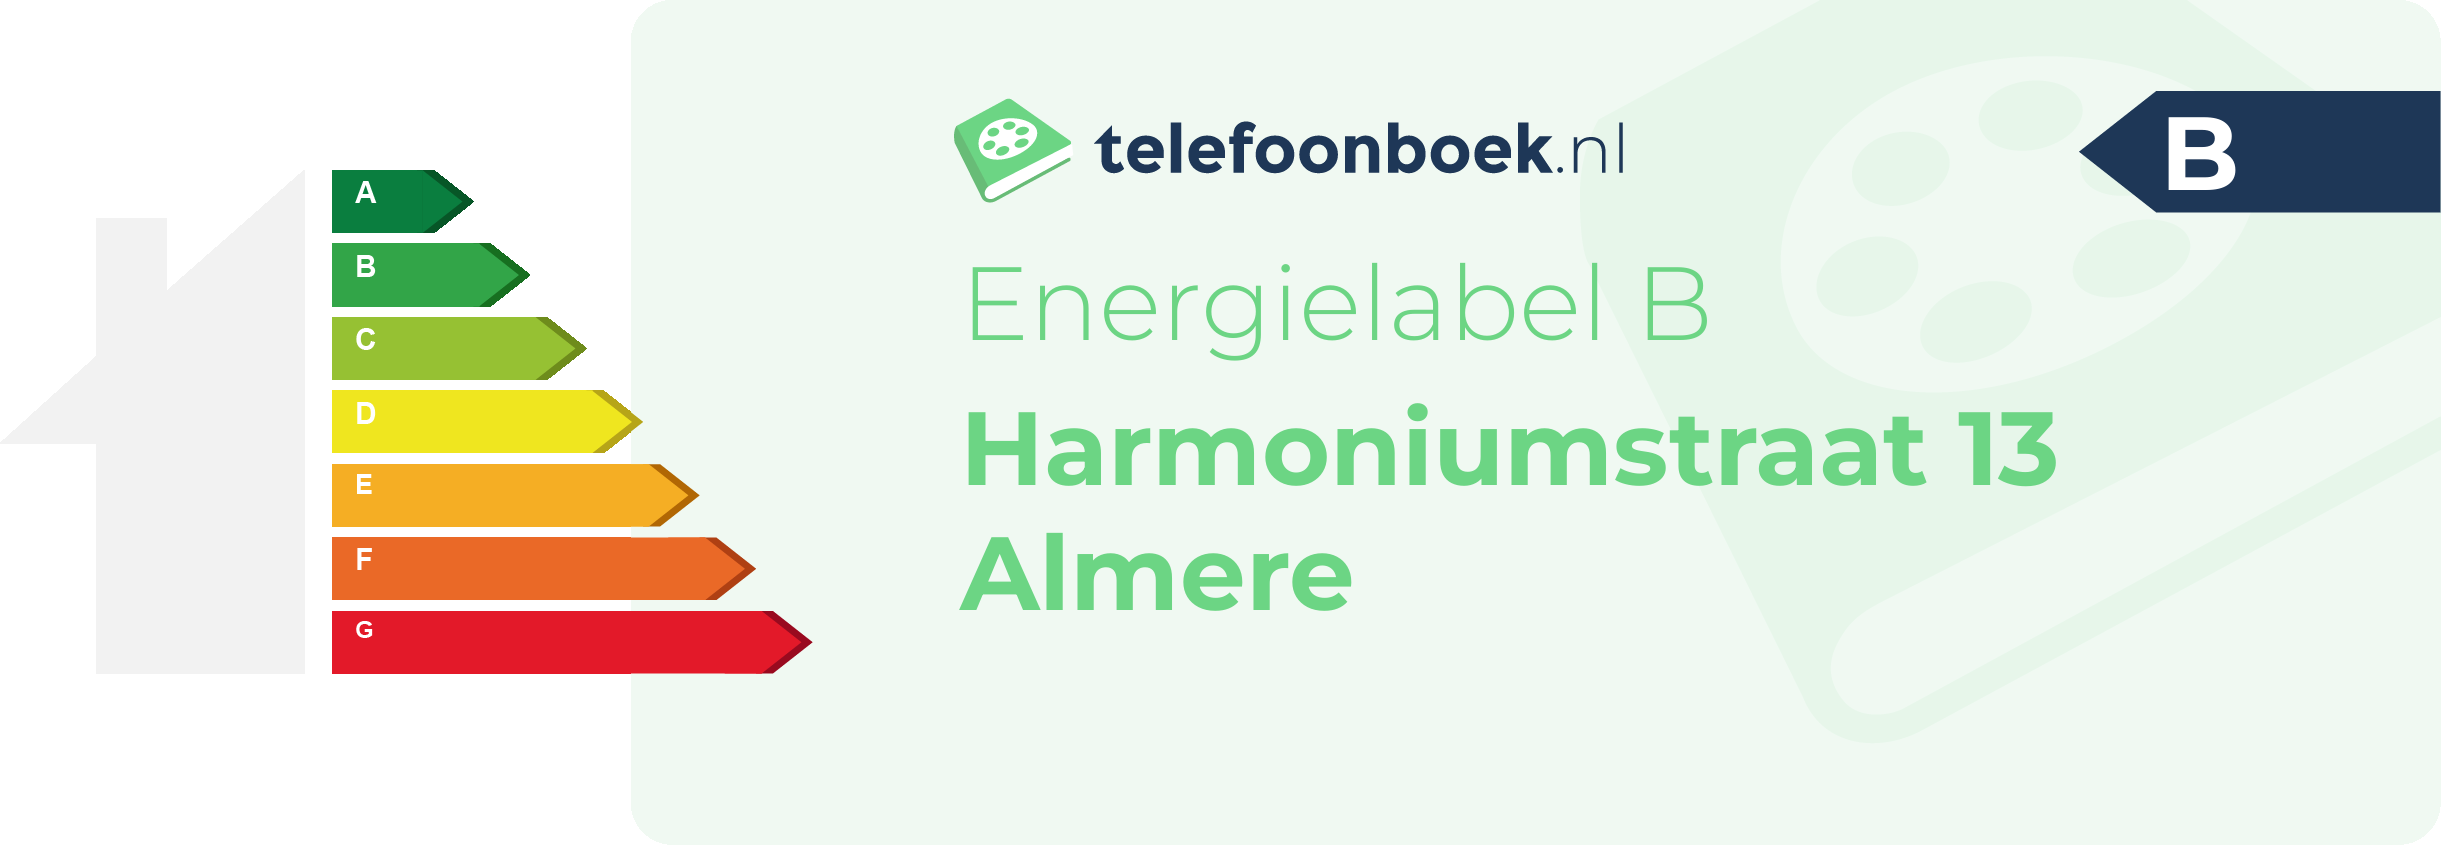 Energielabel Harmoniumstraat 13 Almere